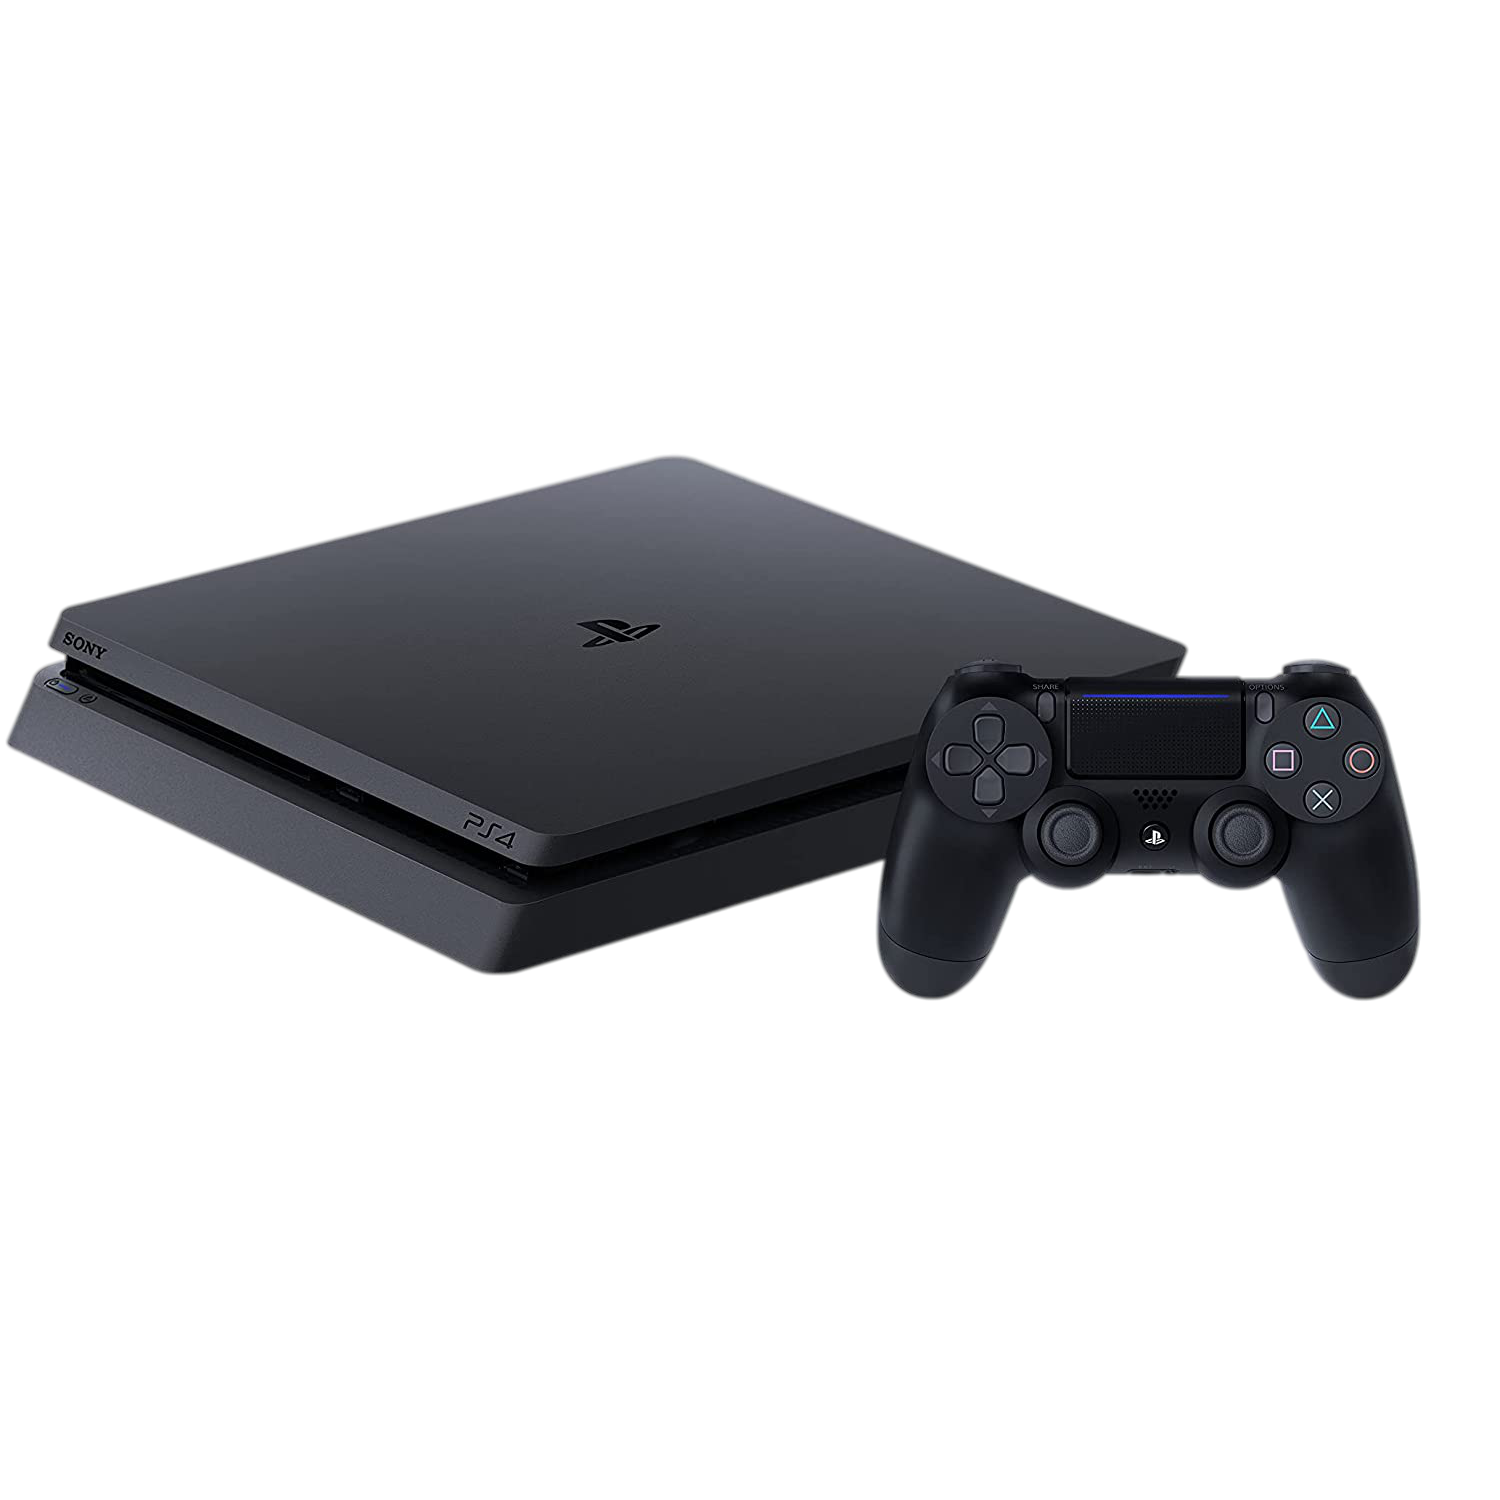 Sony-PlayStation-4-Slim-Console-500GB_de126fc4-43d5-43a2-88b9-33ee776e0c6c